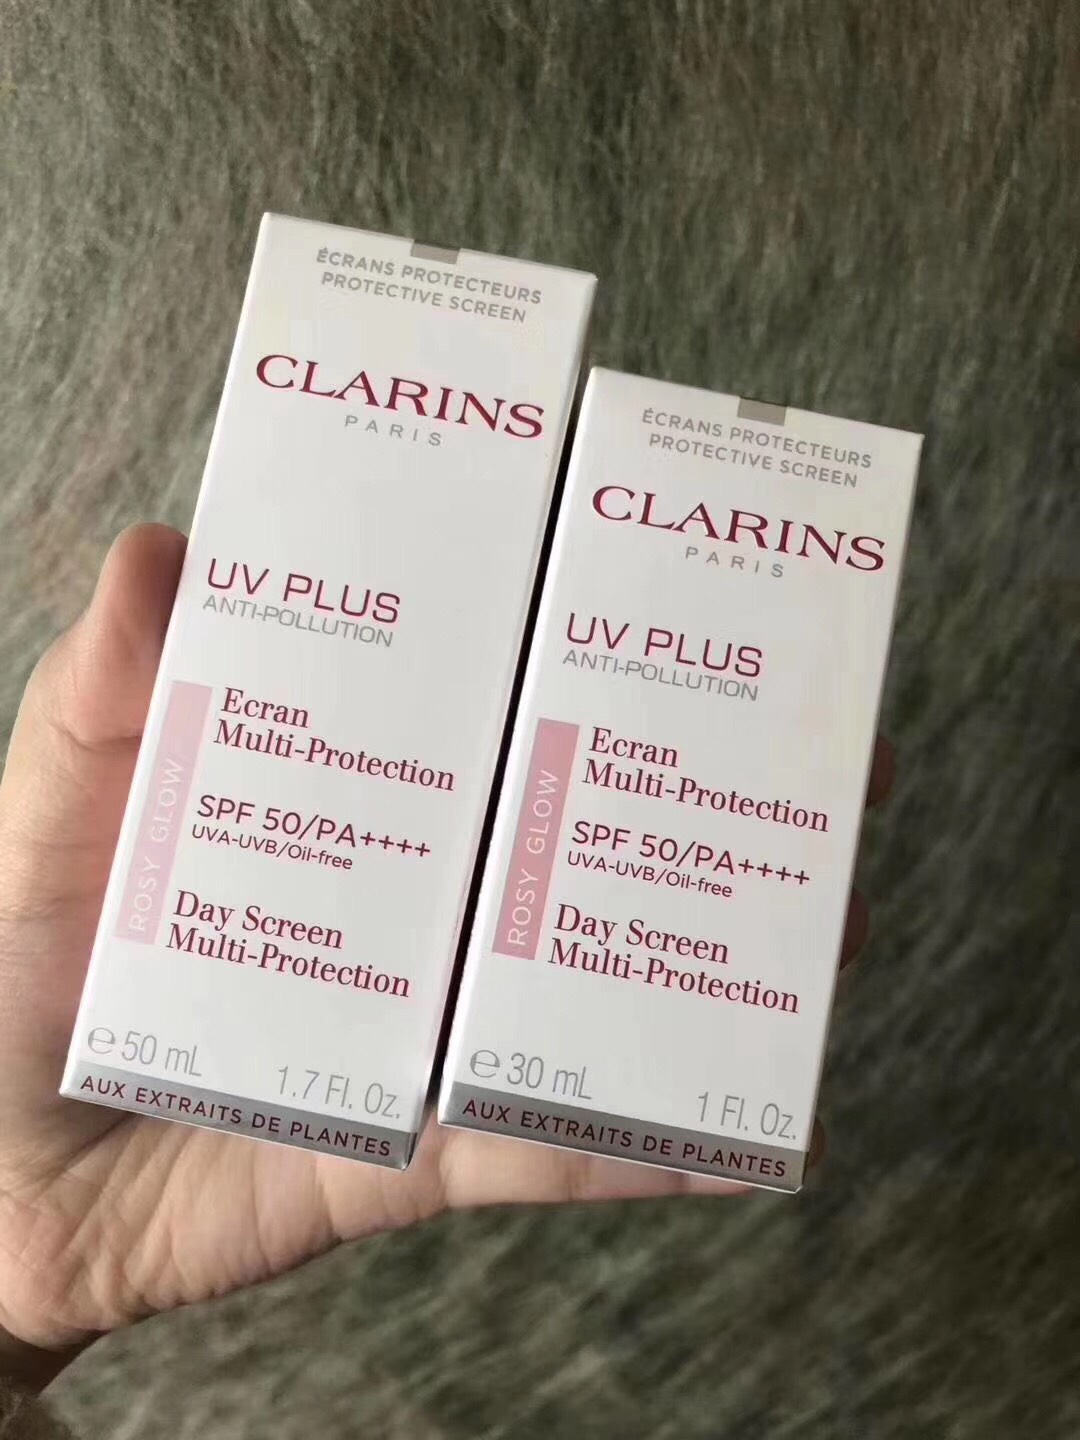 Clarins UV Plus Anti-Pollution Day Screen Multi-Protection SPF 50/PA++++ ขนาดใหม่ 50 ml.